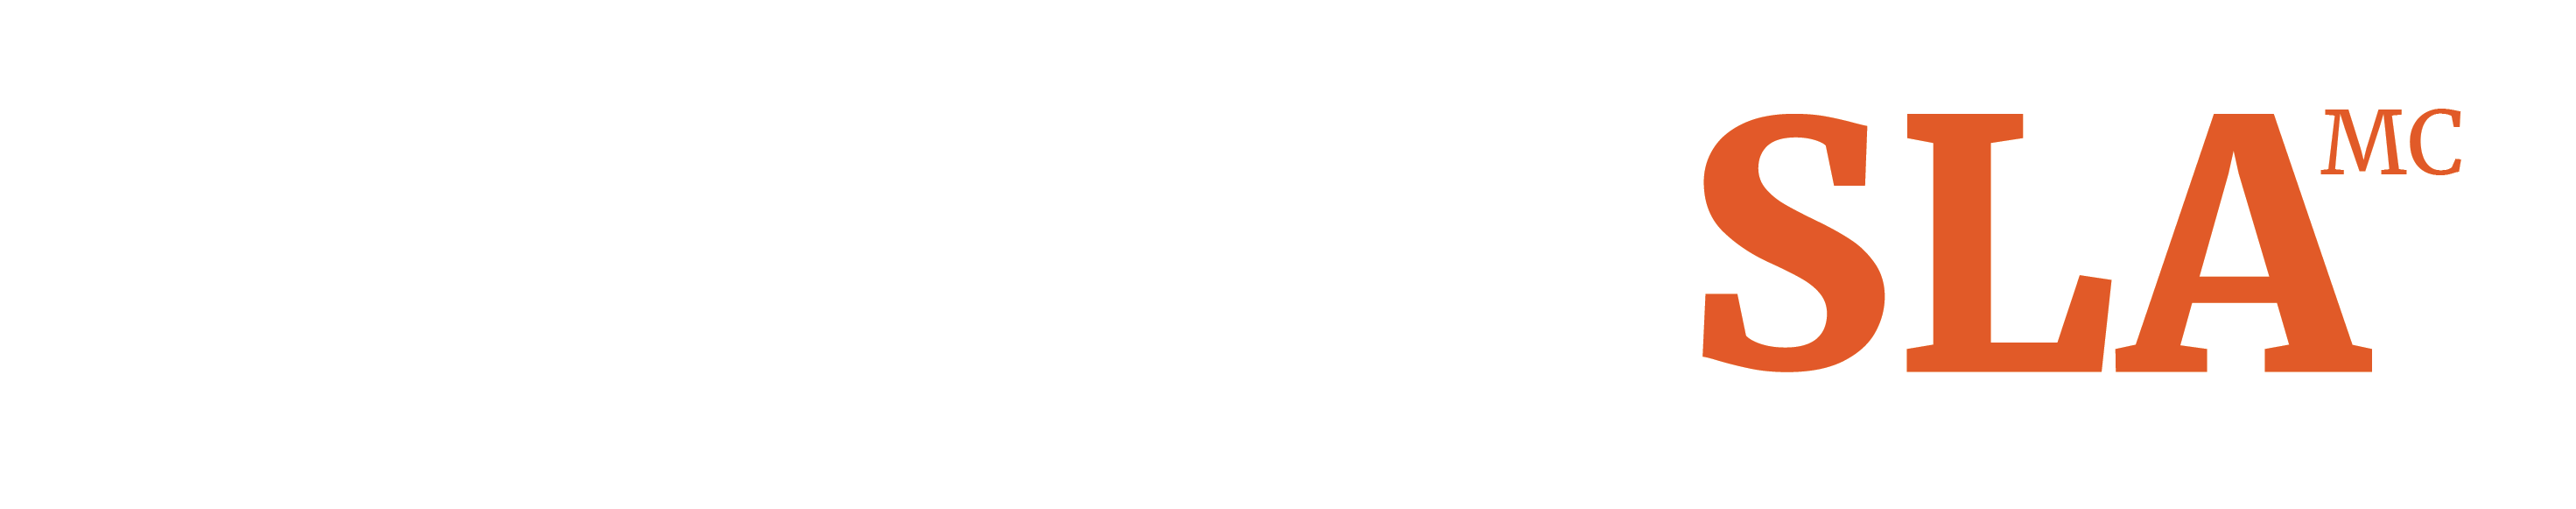 ALS Pathways mobile logo